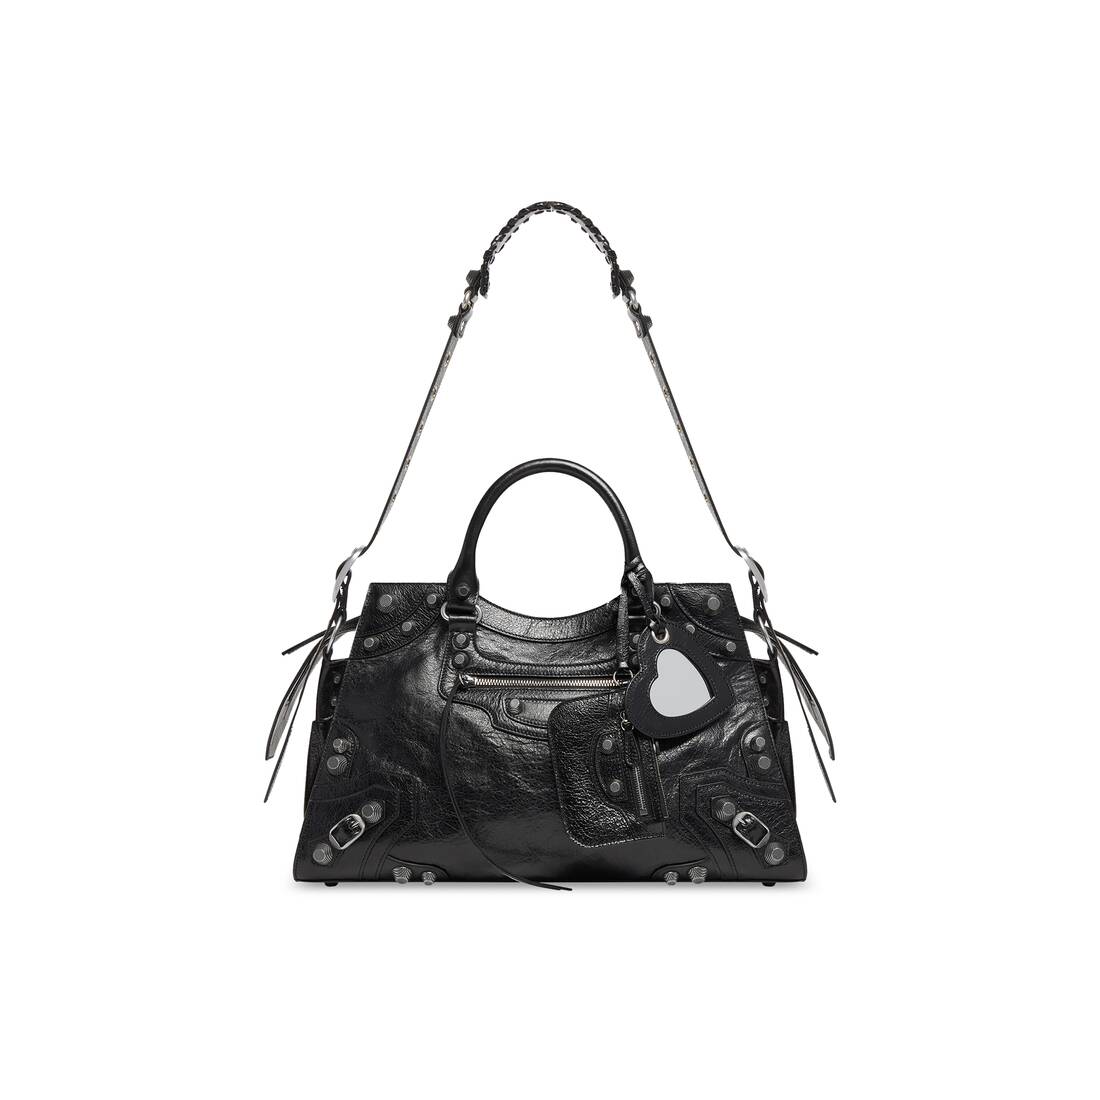 Women's Neo City Handbag in Black